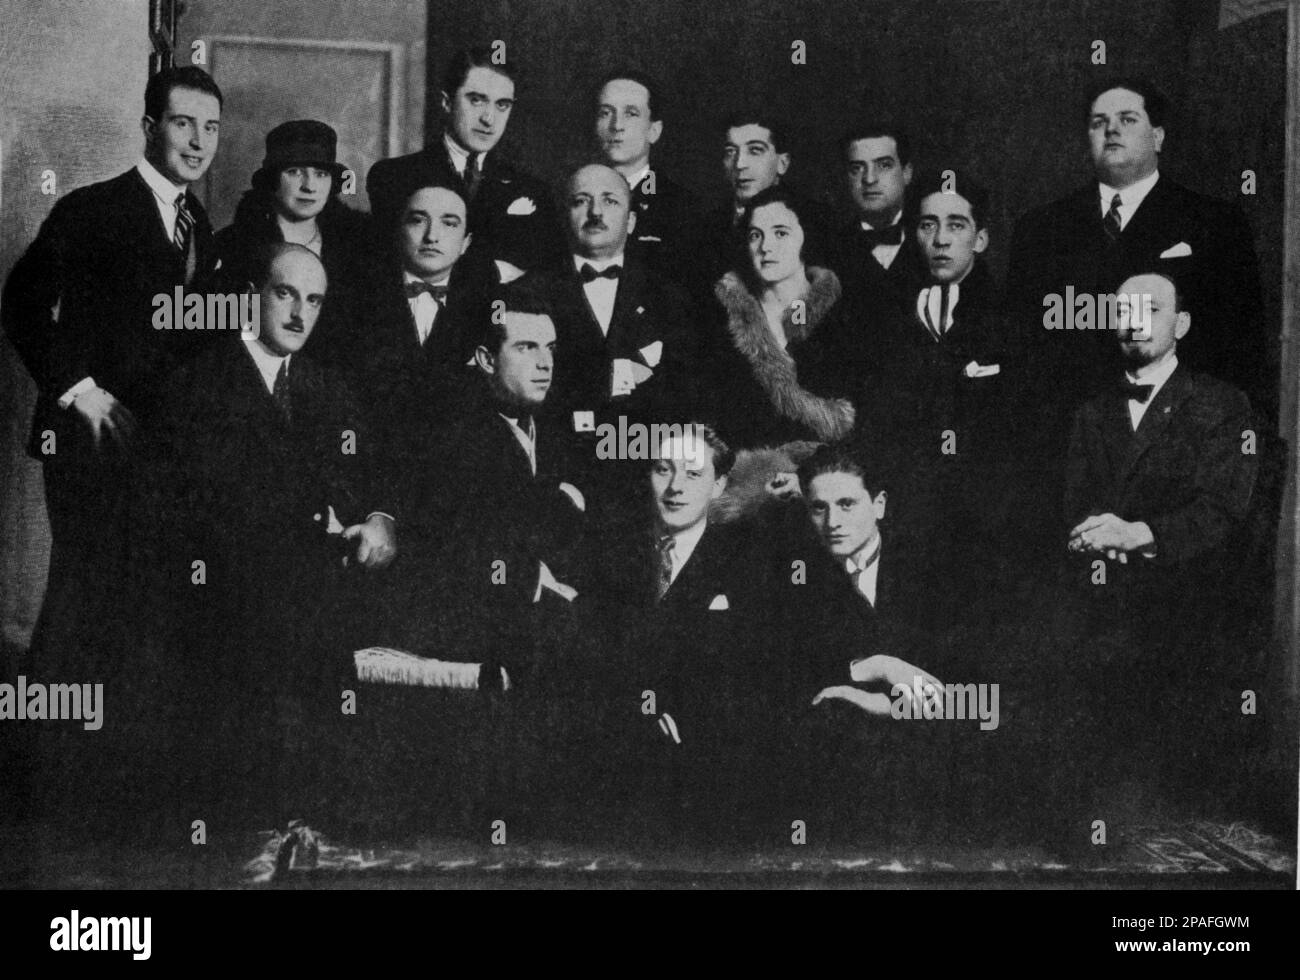 Das Foto der italienischen Künstlergruppe FUTURISTI, veröffentlicht im italienischen Theatermagazin Avantgarde TEATRO , märz - april 1927 : (Von links) Fedele AZARI , Franco CASAVOLA , D' ANGELI , ARMANDO MAZZA , Federico B. PINNA , FORTUNATO DEPERO , FILIPPO TOMMASO MARINETTI ( 1876 - 1944 ) , BENEDETTA MARINETTI , Mino SOMENZI , Guglielmo JANNELLI , ENRICO PRAMPOLINI , Luigi RUSSOLO . Foto von Caminada , Mailand - FUTURISMUS - FUTURISTA - FUTURIST - STORIA DELL' ARTE - ARTS - MUSICA - MUSIK - Amici - Freunde - THEATER - AVANGUARDIA - Porträt - Rituto - Baffi - Schnurrbart - Cravatta Stockfoto